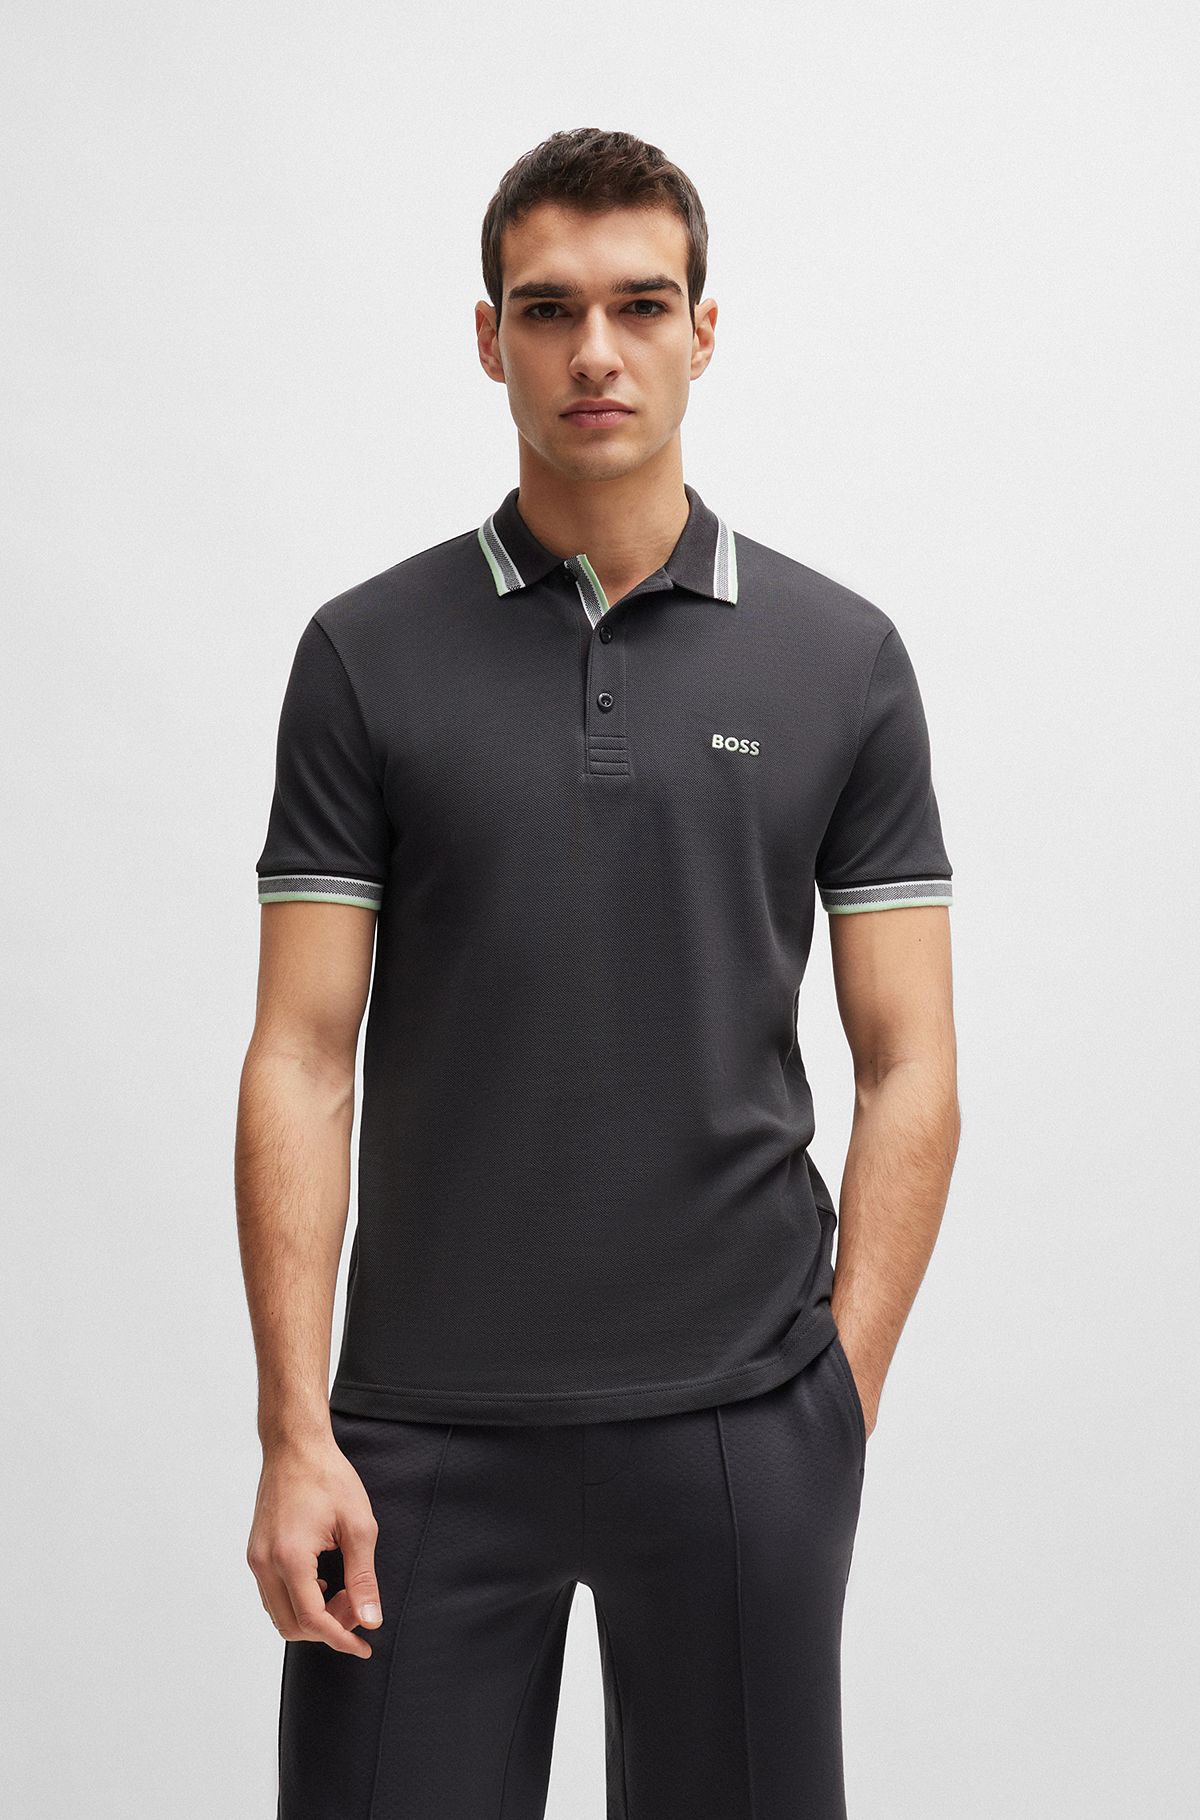  Polo shirt with contrast logo details, Dark Grey